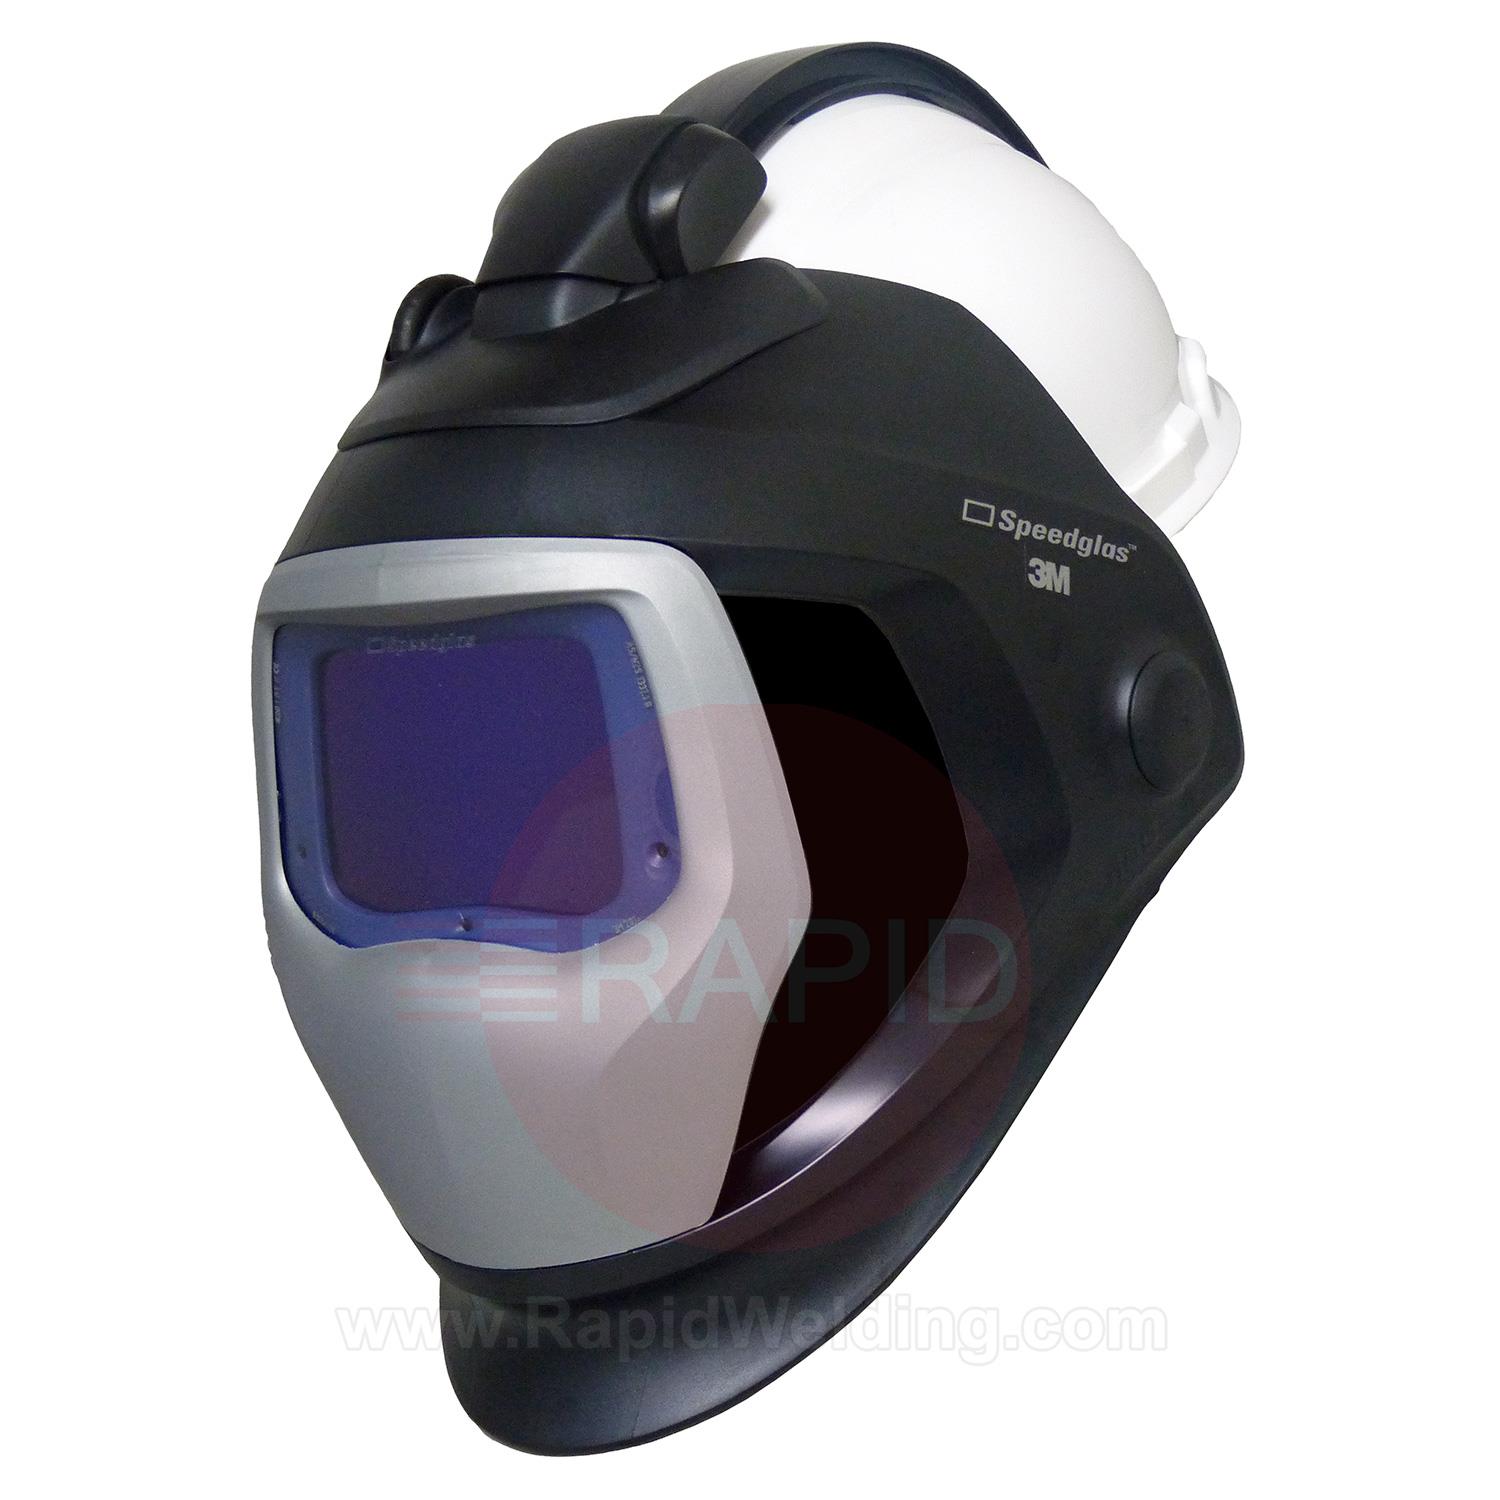 Buy 3m Speedglas 9100 Qr Xxi Auto Darkening Welding Helmet With H701 Safety Helmet Welding Supplies From Rapid Welding